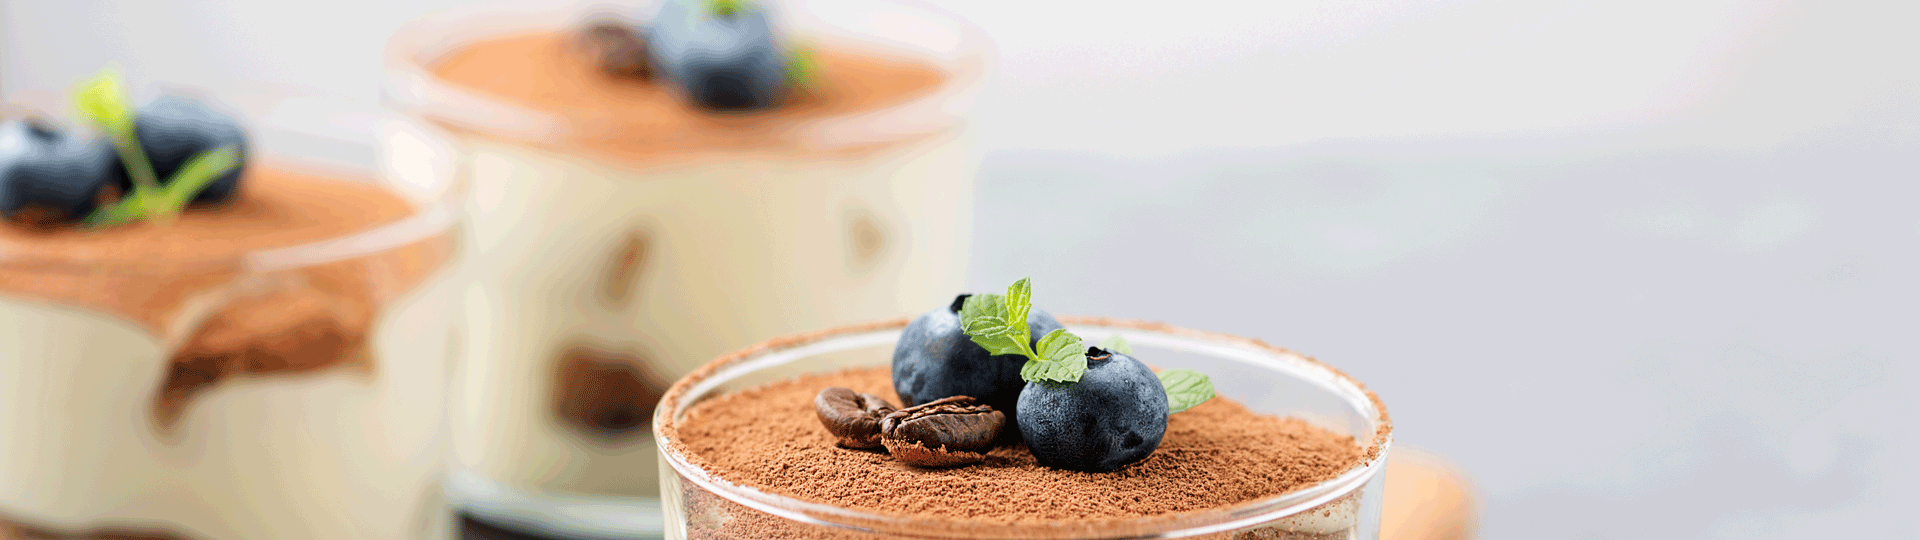 yogurt with cinnamon and blueberries